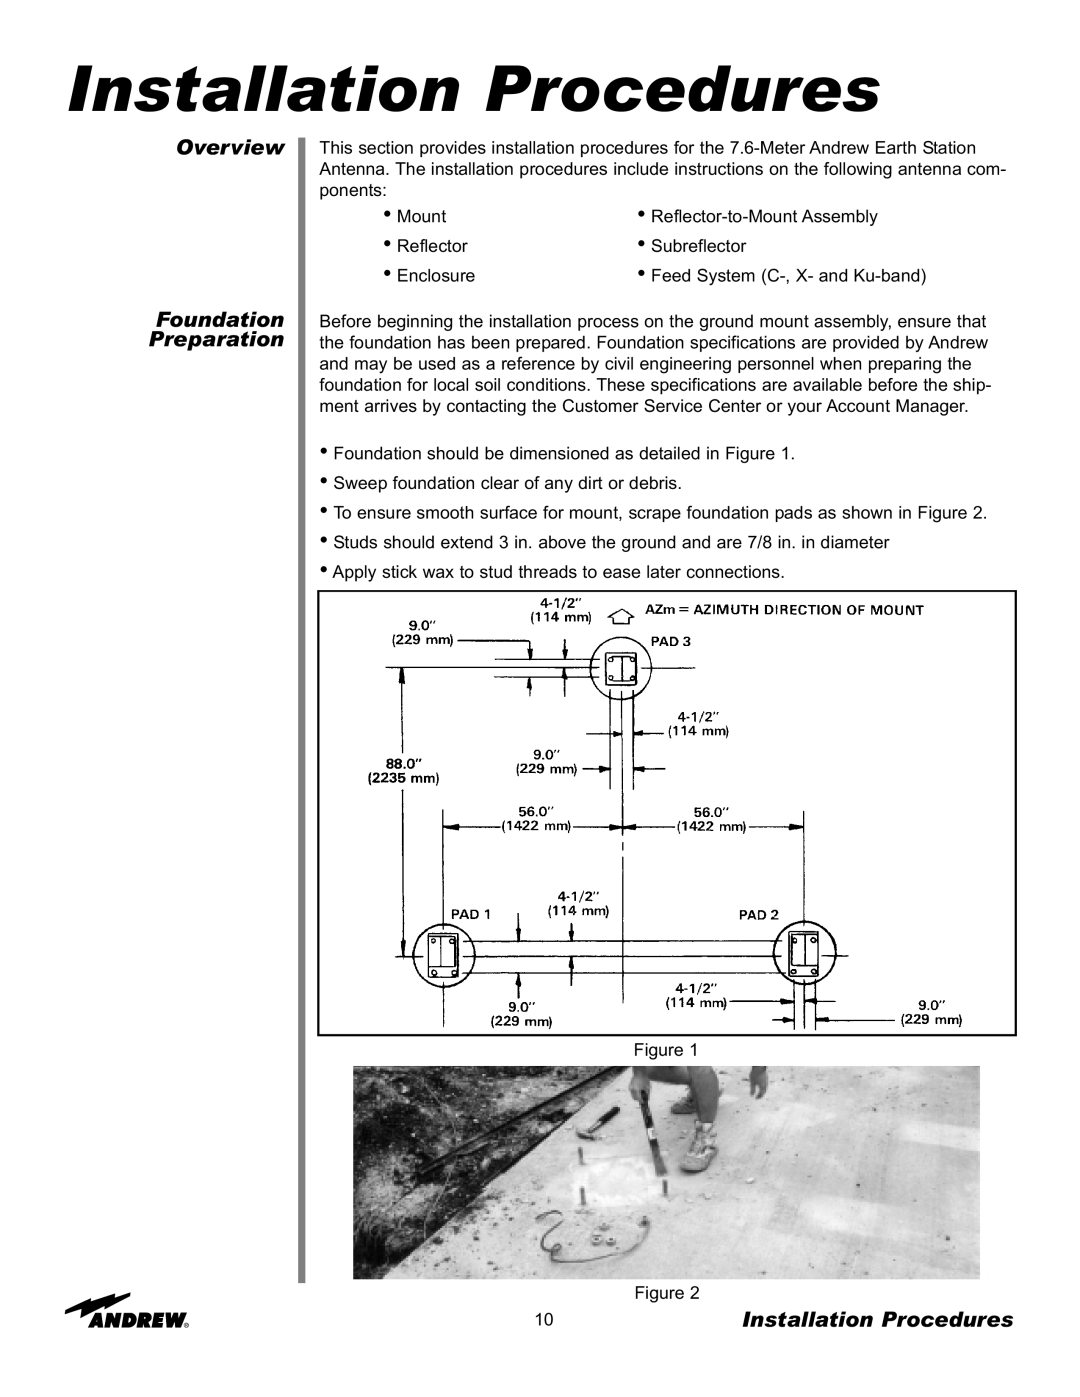 Andrew 7.6-Meter ESA manual Installation Procedures, Overview Foundation Preparation 